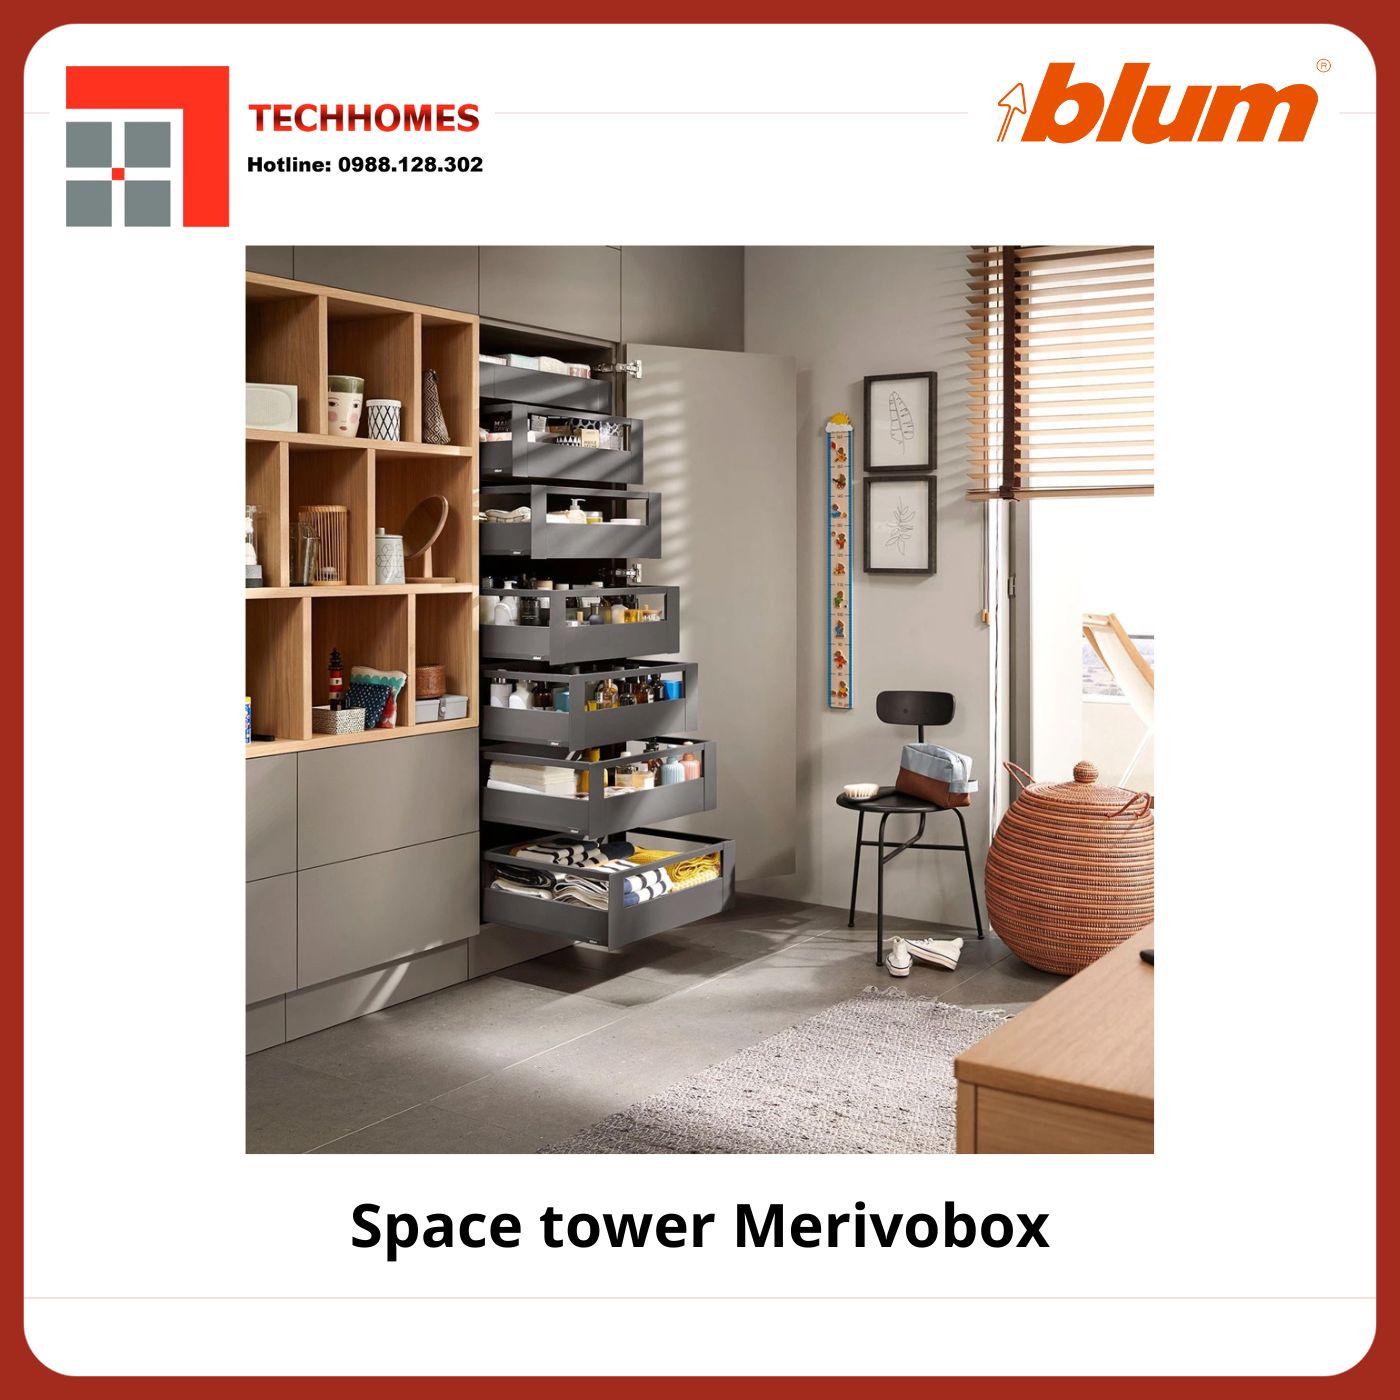 TỦ ĐỒ KHO BLUM SPACE TOWER MERIVOBOX - Space tower Merivobox